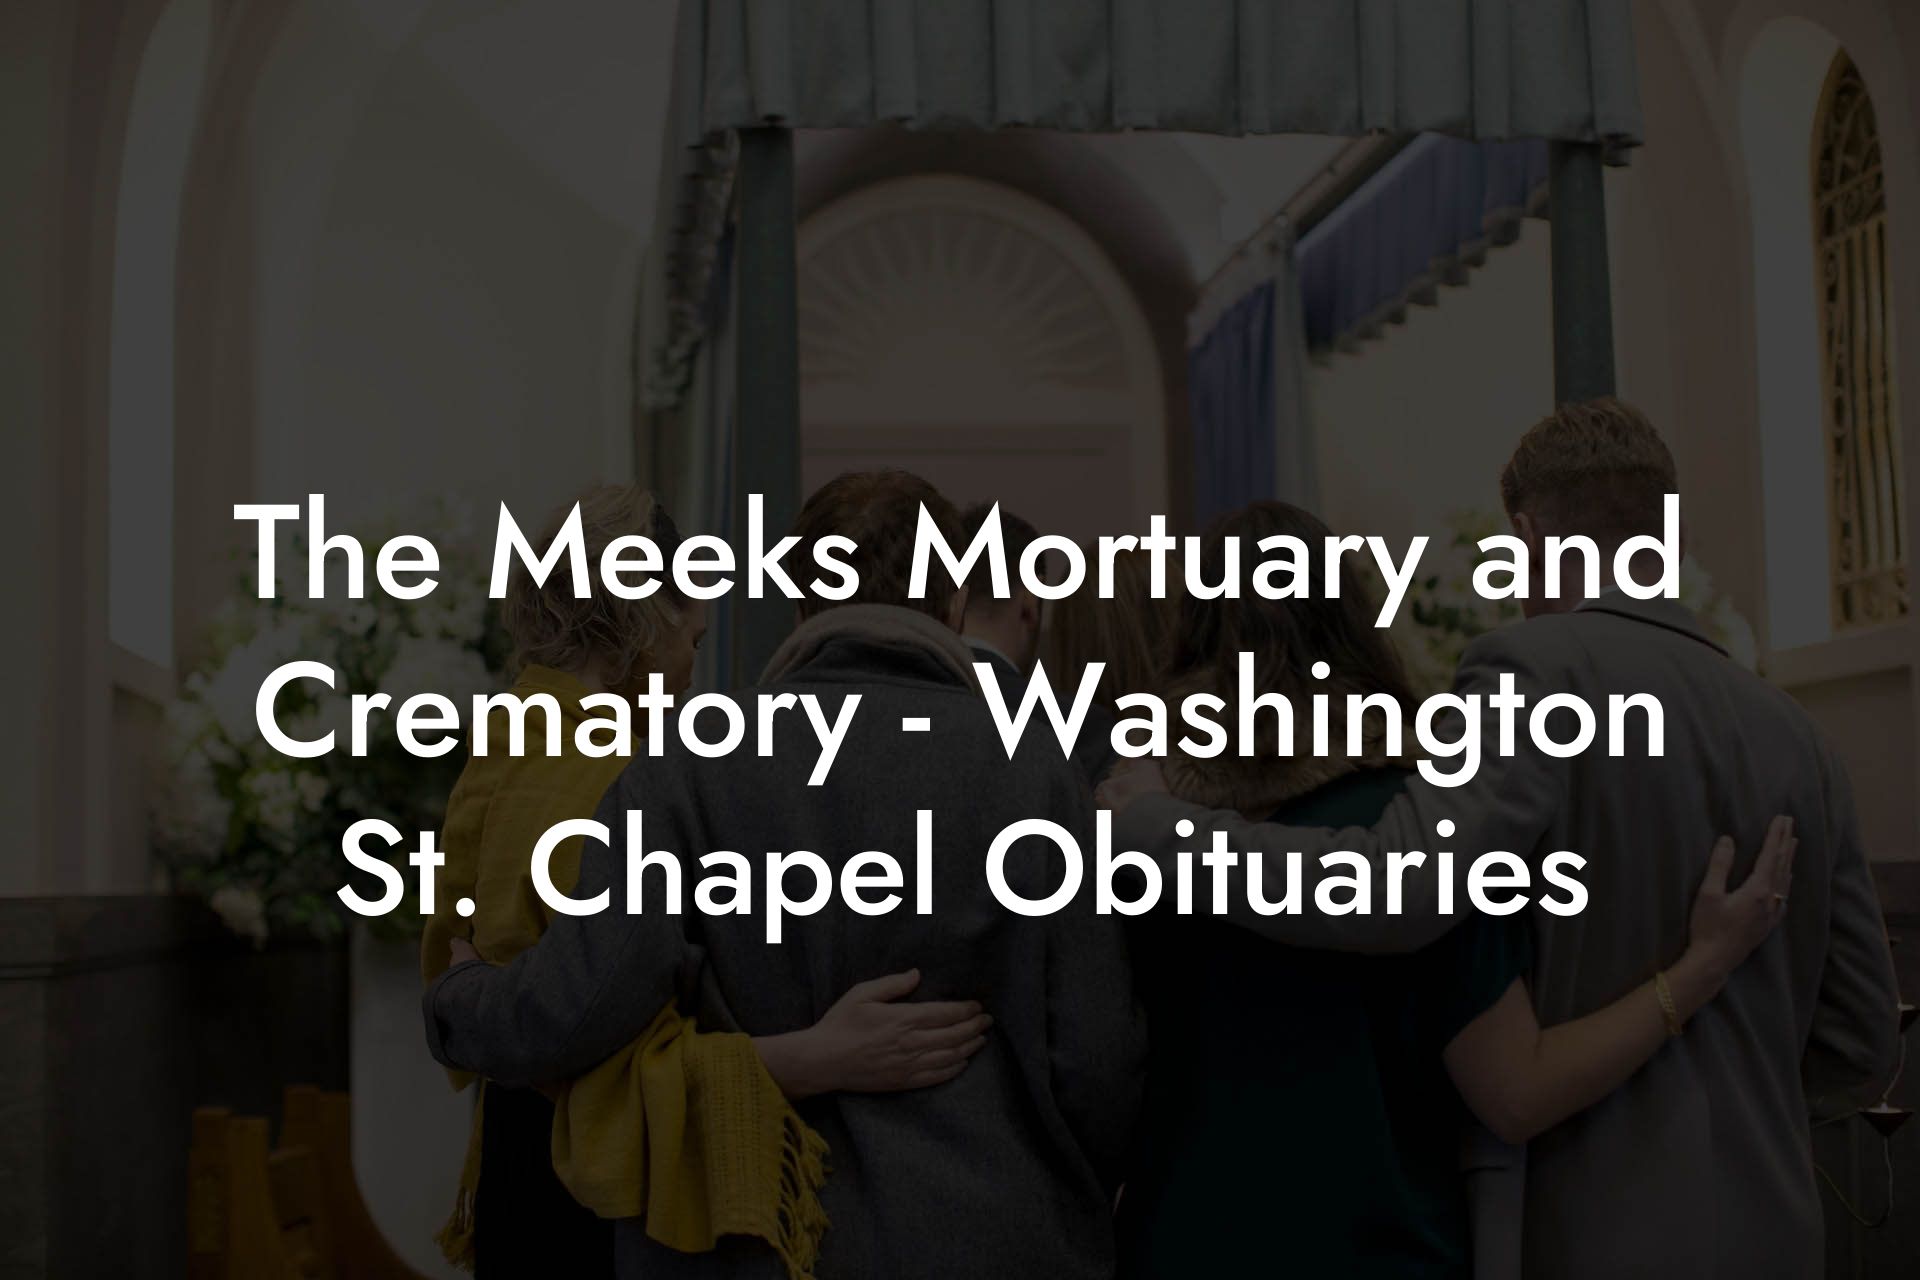 The Meeks Mortuary and Crematory - Washington St. Chapel Obituaries